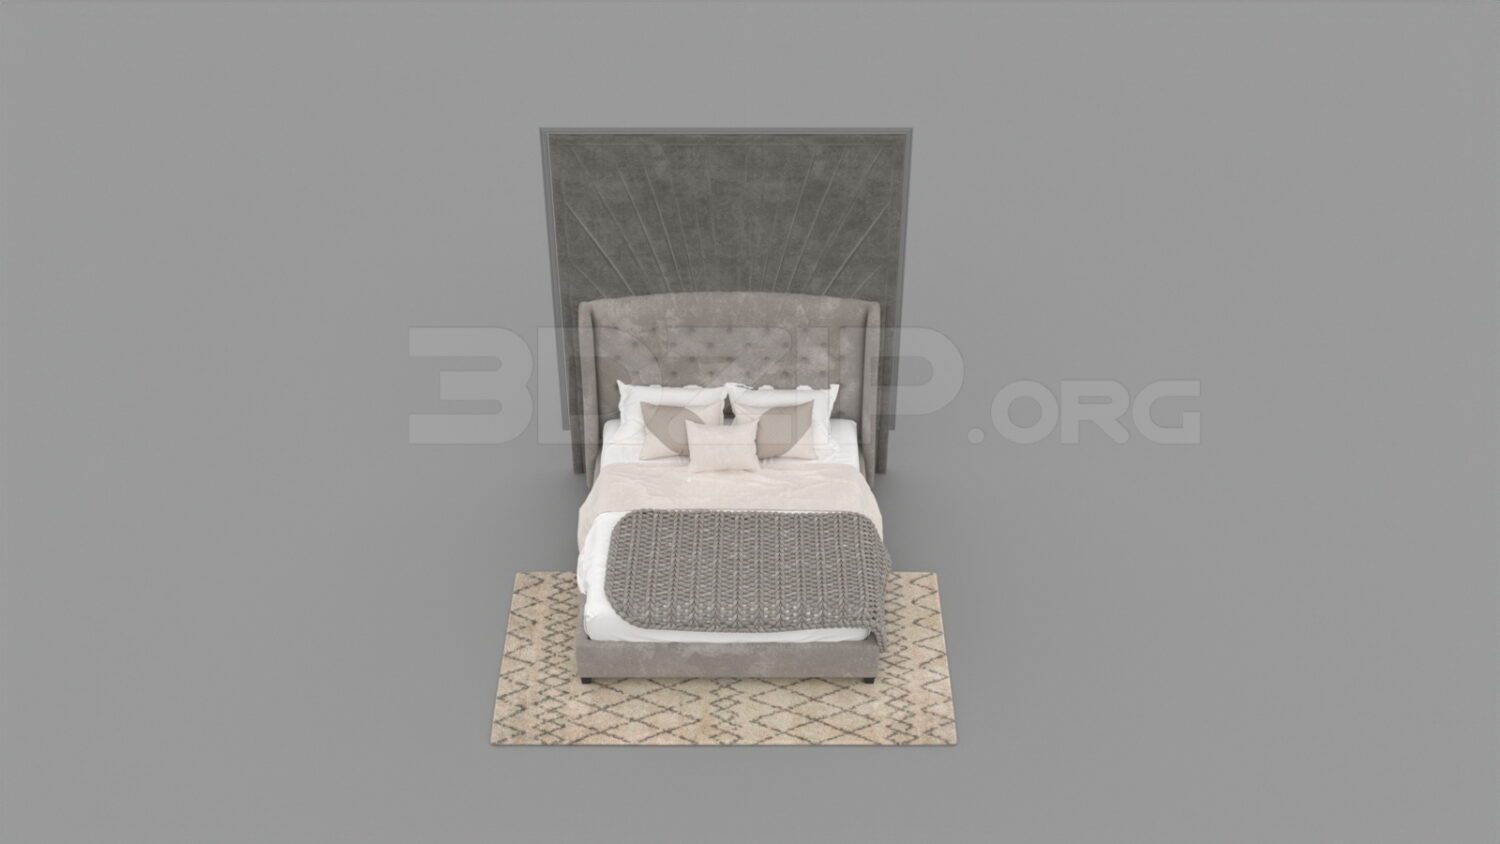 3014. Free 3D Bed Model Download